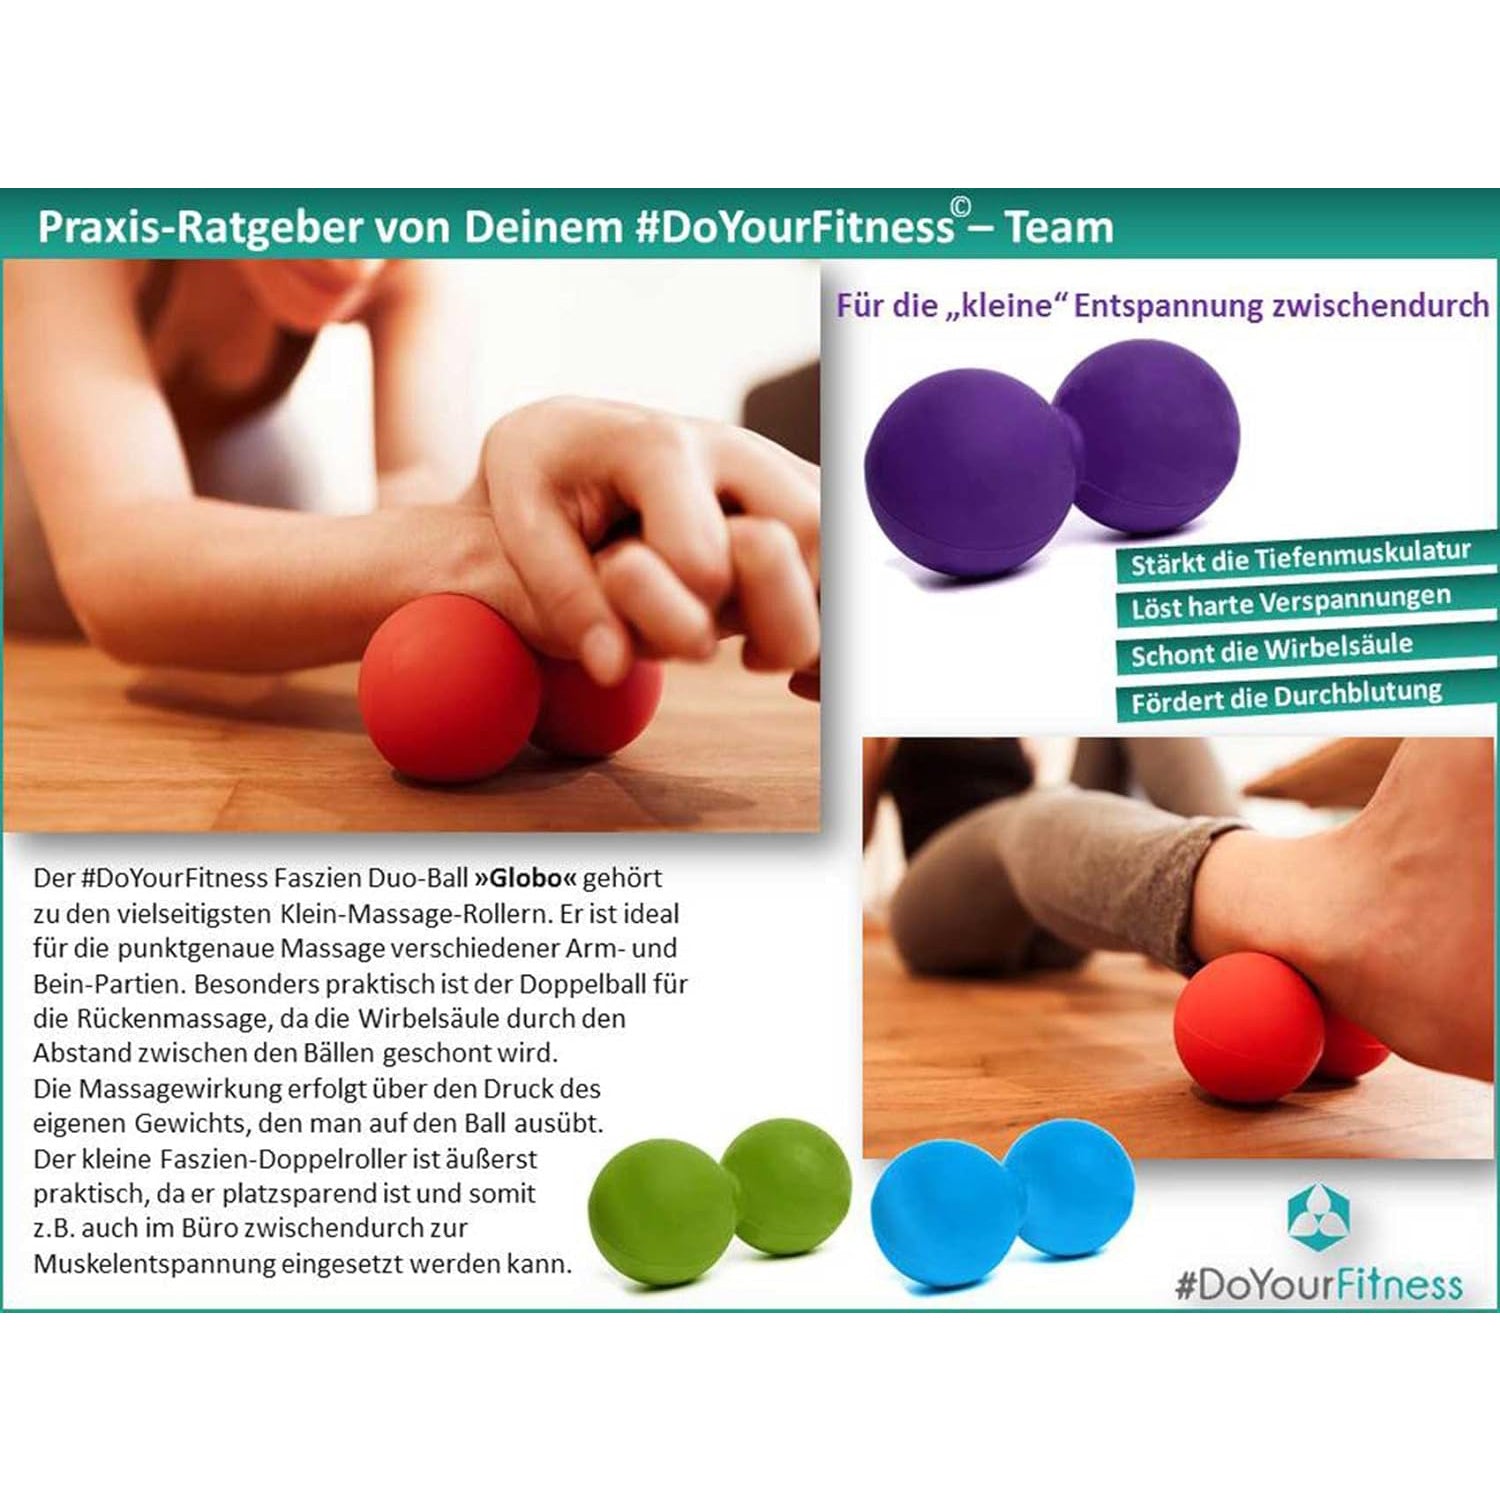 Double Faszienball -  Massageball Globo - ca 8cm Durchmesser aus Silikon - Schwarz